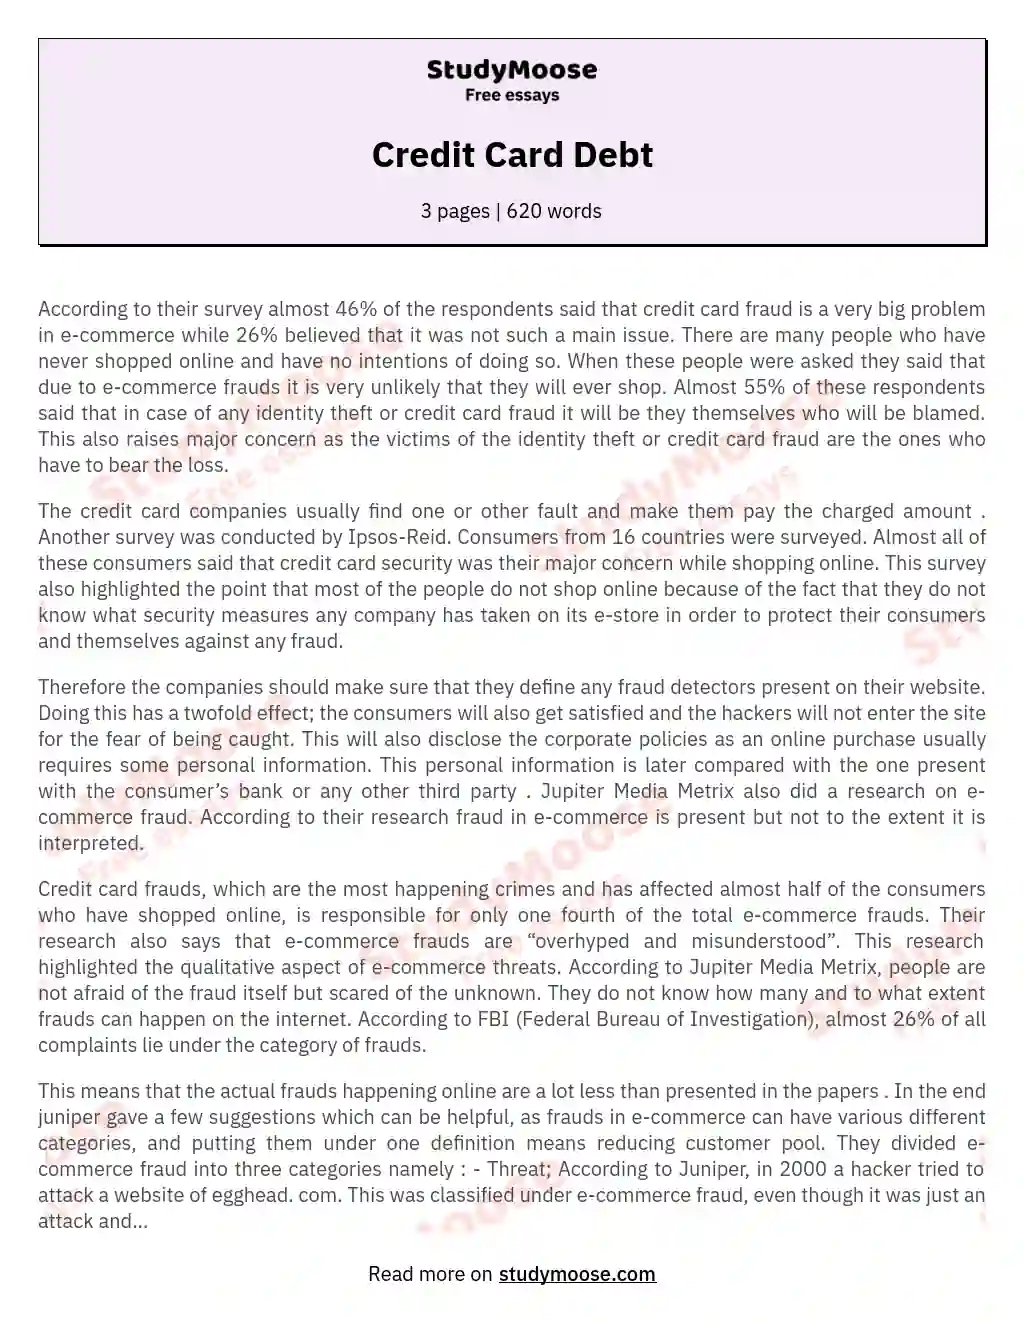 Credit Card Debt essay